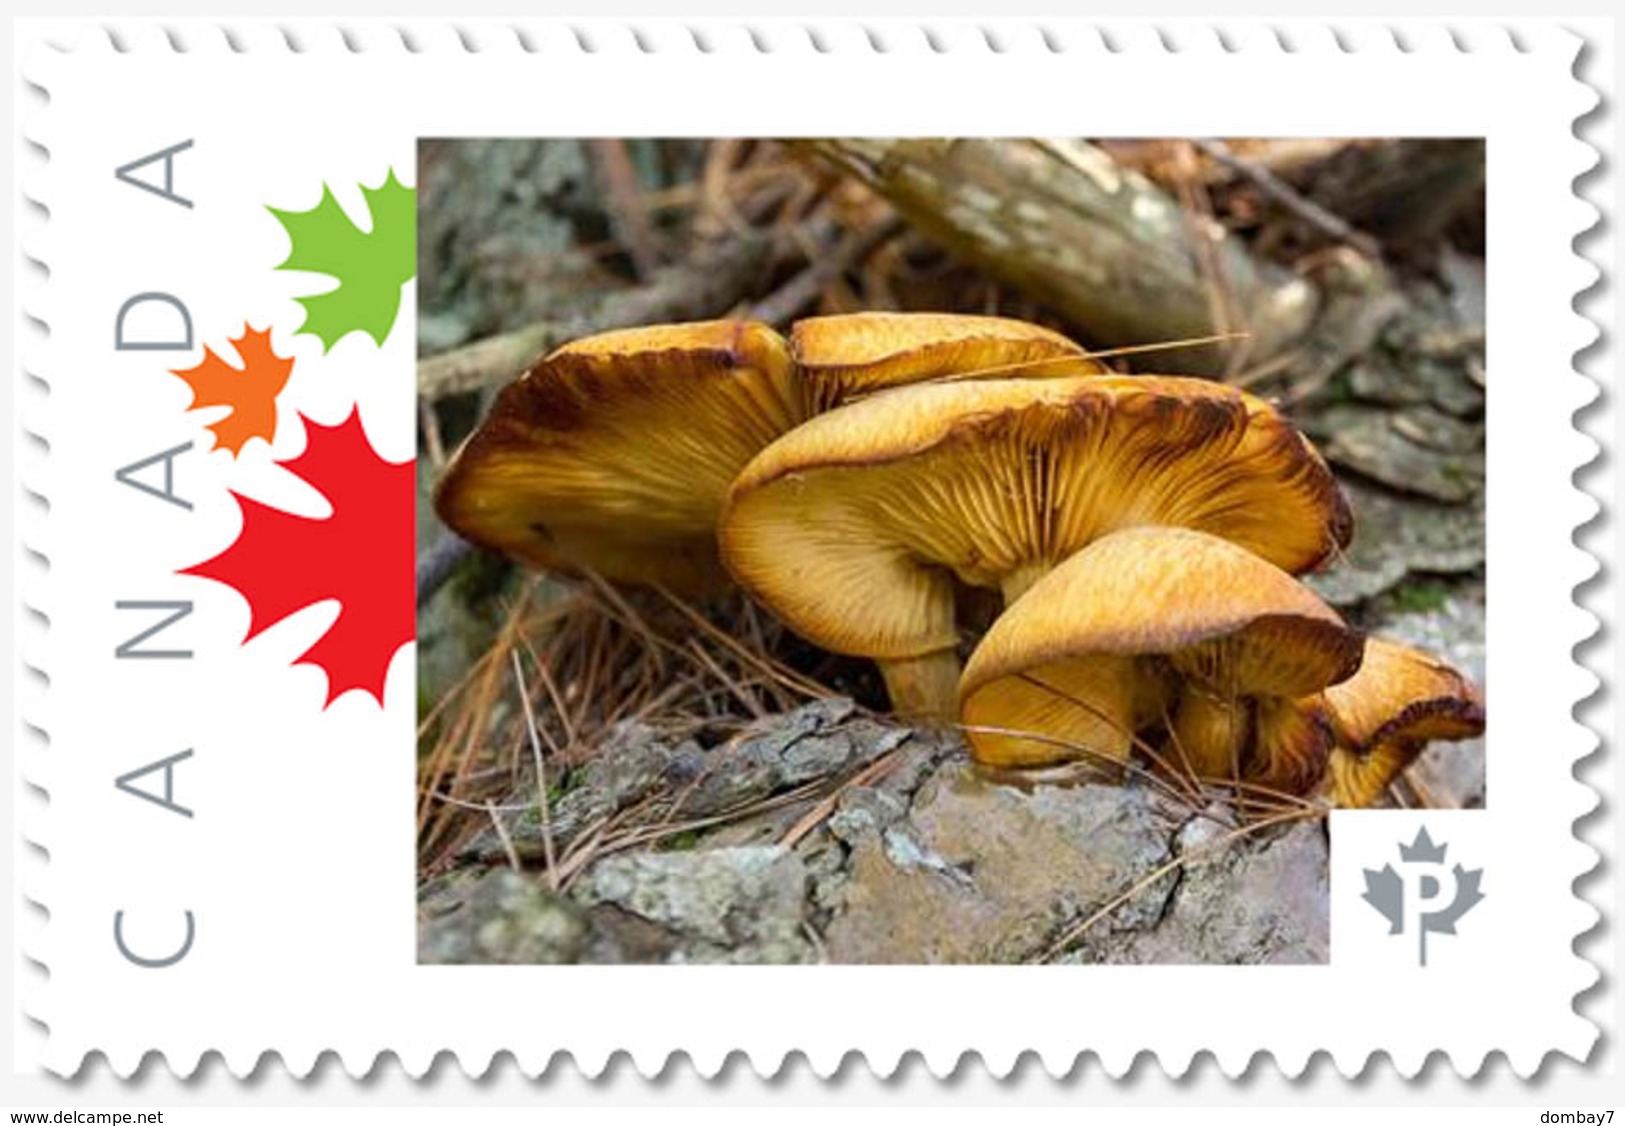 MUSHROOMS = Picture Postage Stamp MNH-VF Canada 2019 [p19-02sn18] - Mushrooms